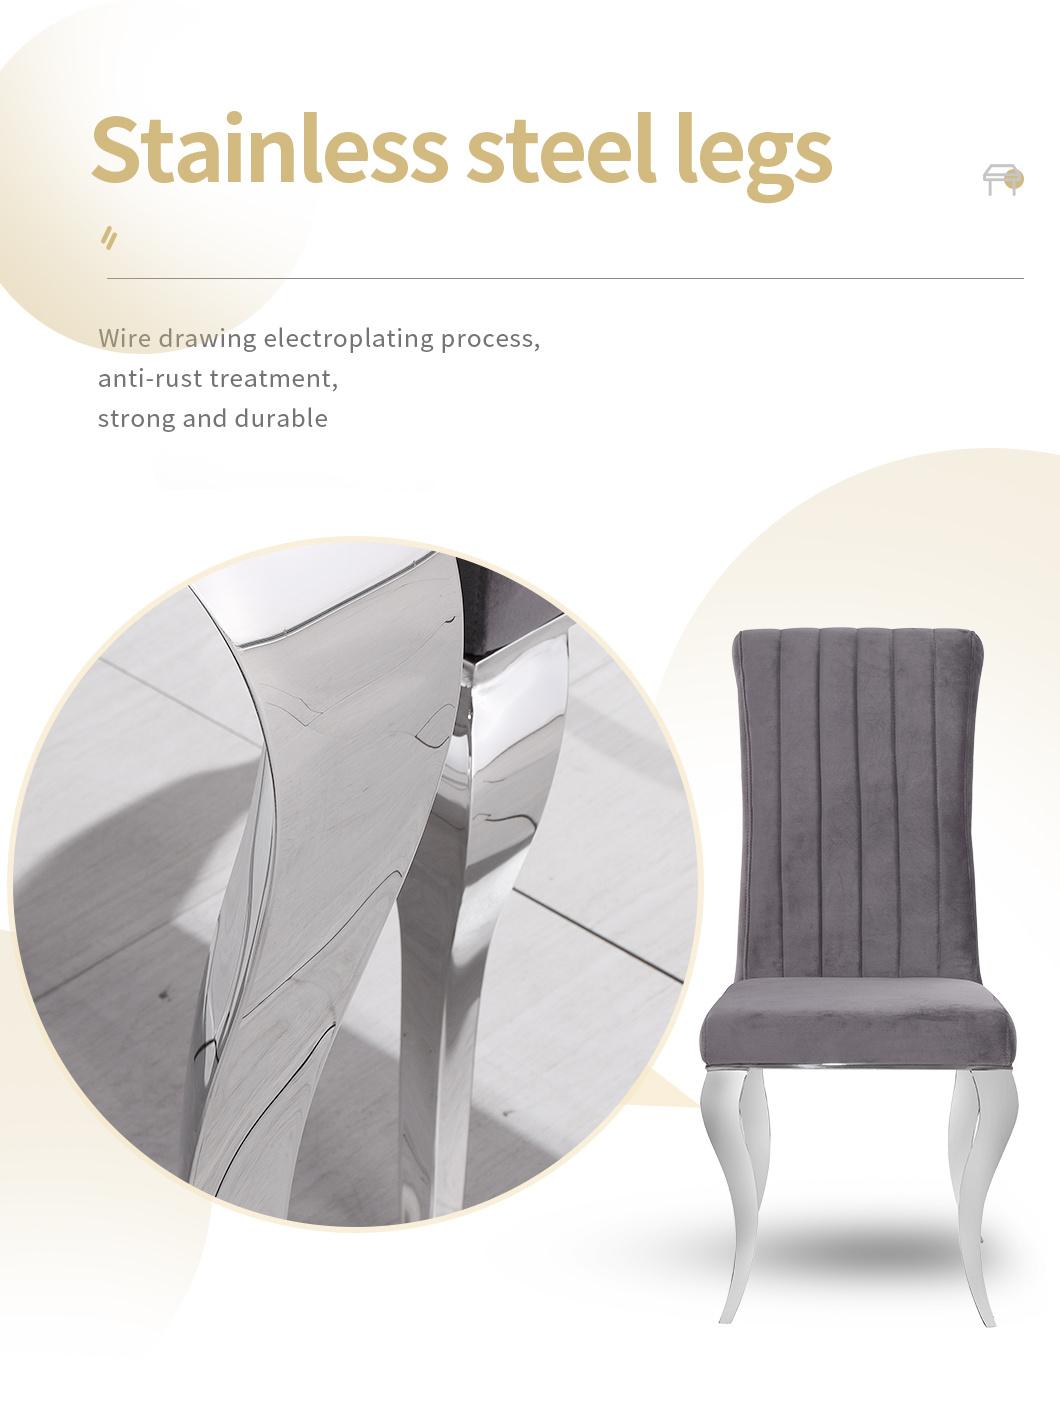 China Wholesale Modern Home Furniture Set Restaurant Velvet Upholstered Dining Chairs